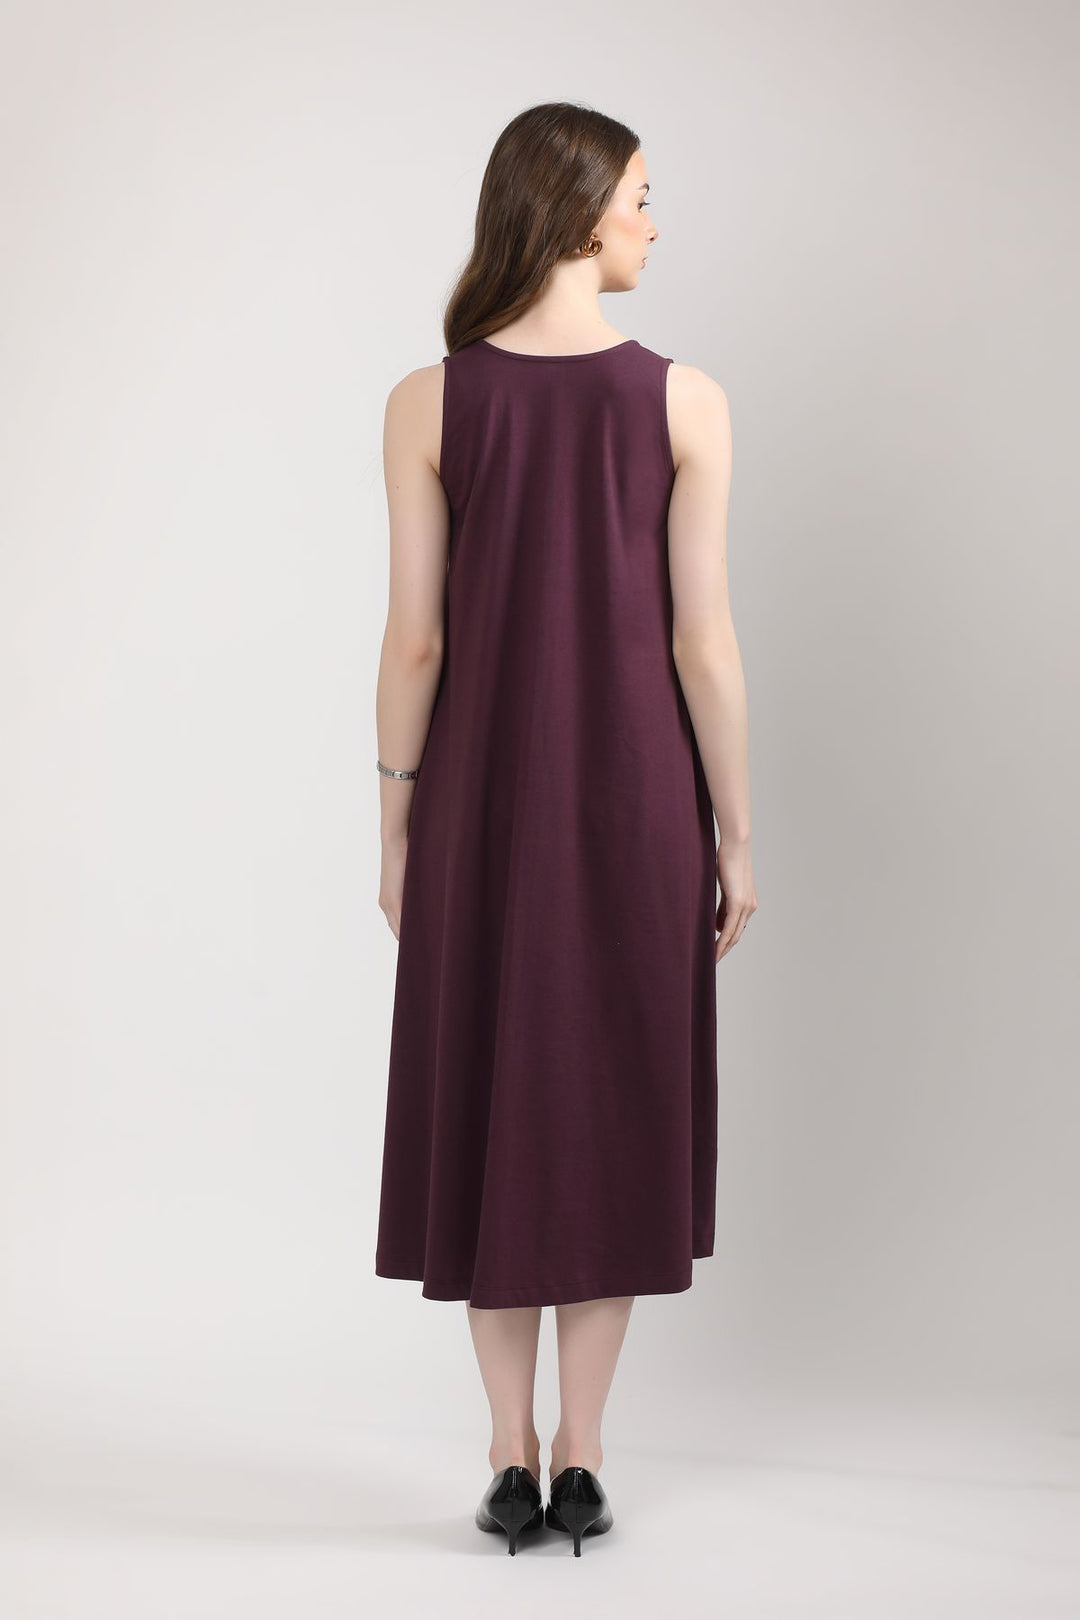 Roxane Pocket Dress - Cherry berry